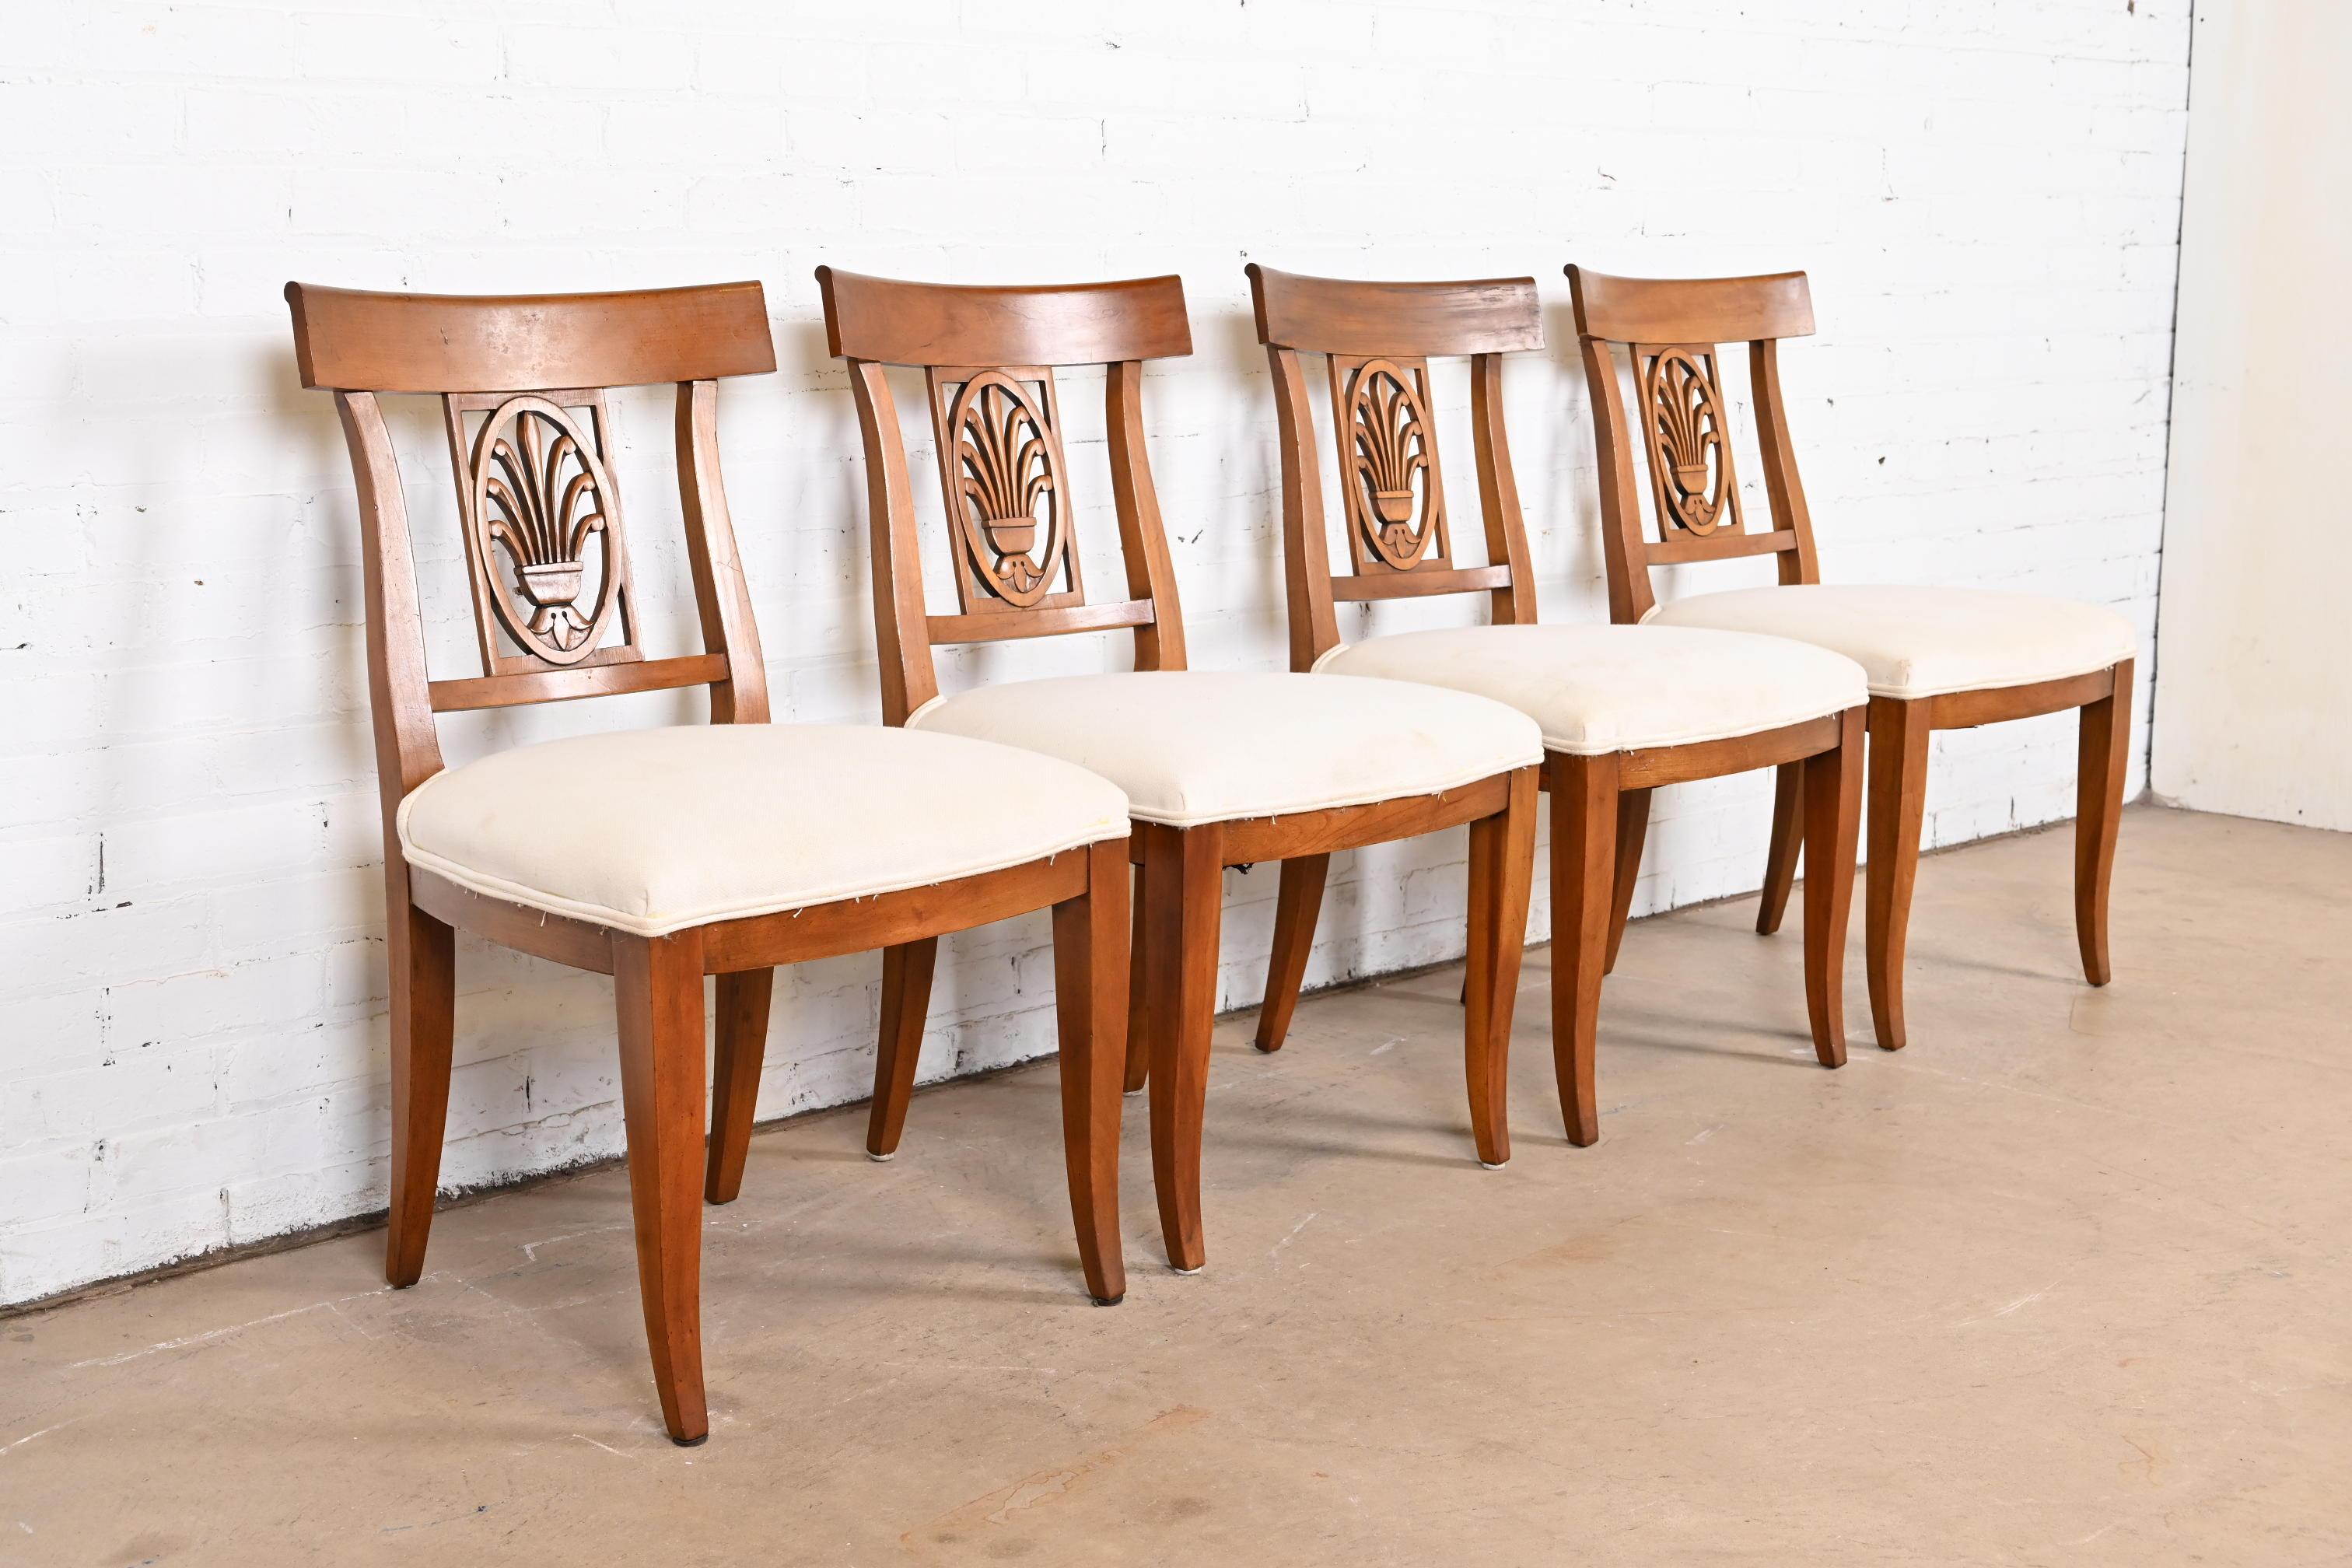 Kindel Furniture Regency geschnitzte Obstholz-Esszimmerstühle, Vierer-Set (amerikanisch)